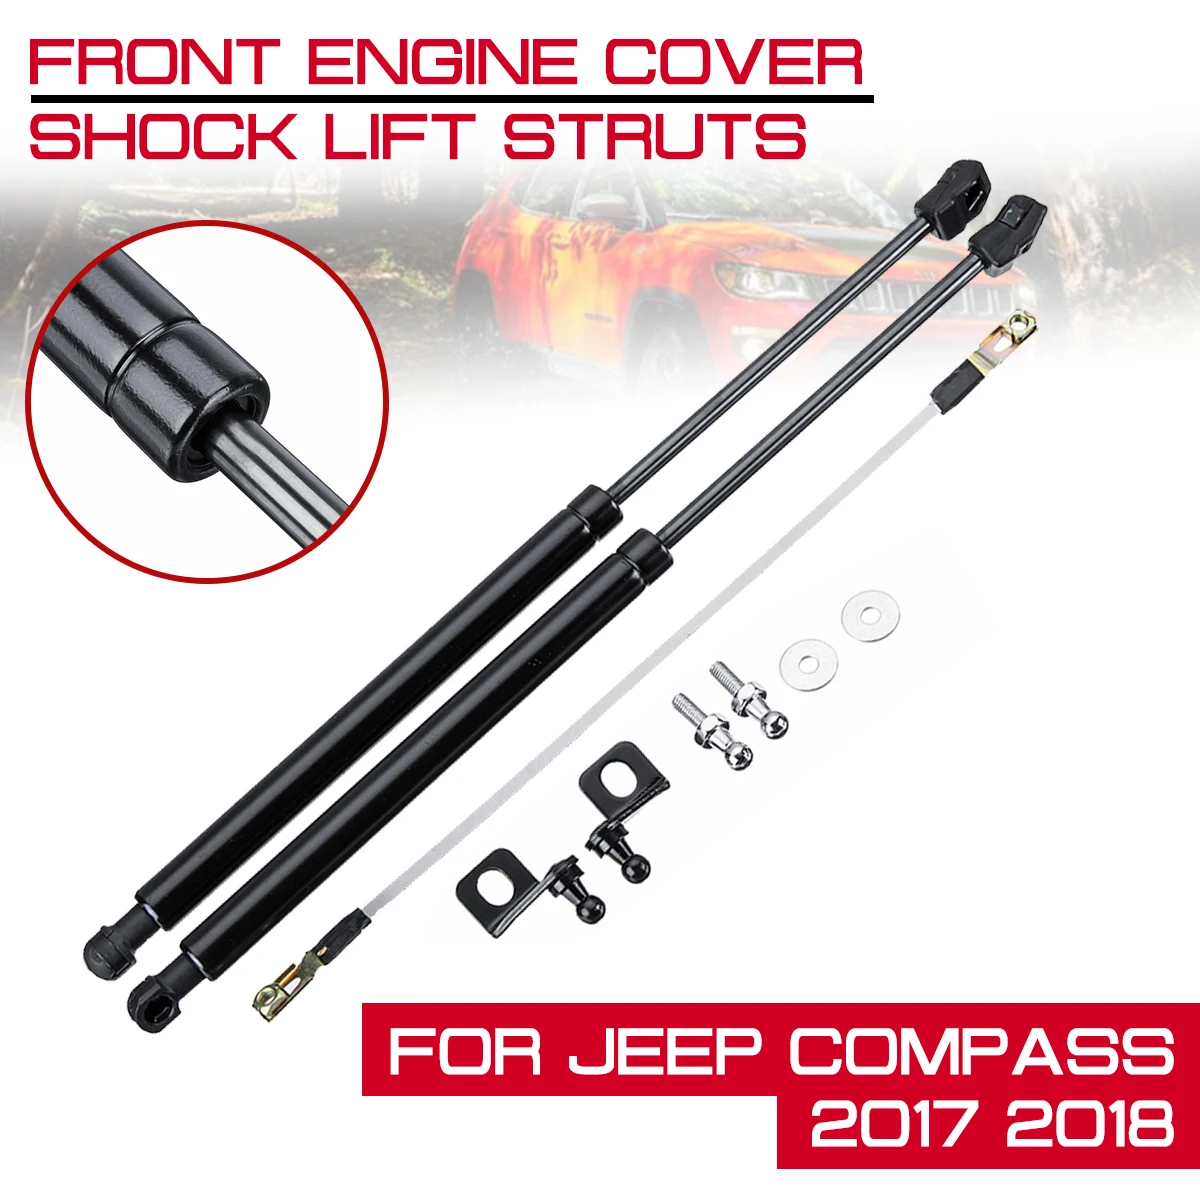 

For Jeep Compass 2017 2018 Car Front Engine Cover Hood Shock Lift Strut Struts Bar Support Props Rod Arm Gas Spring Bracket